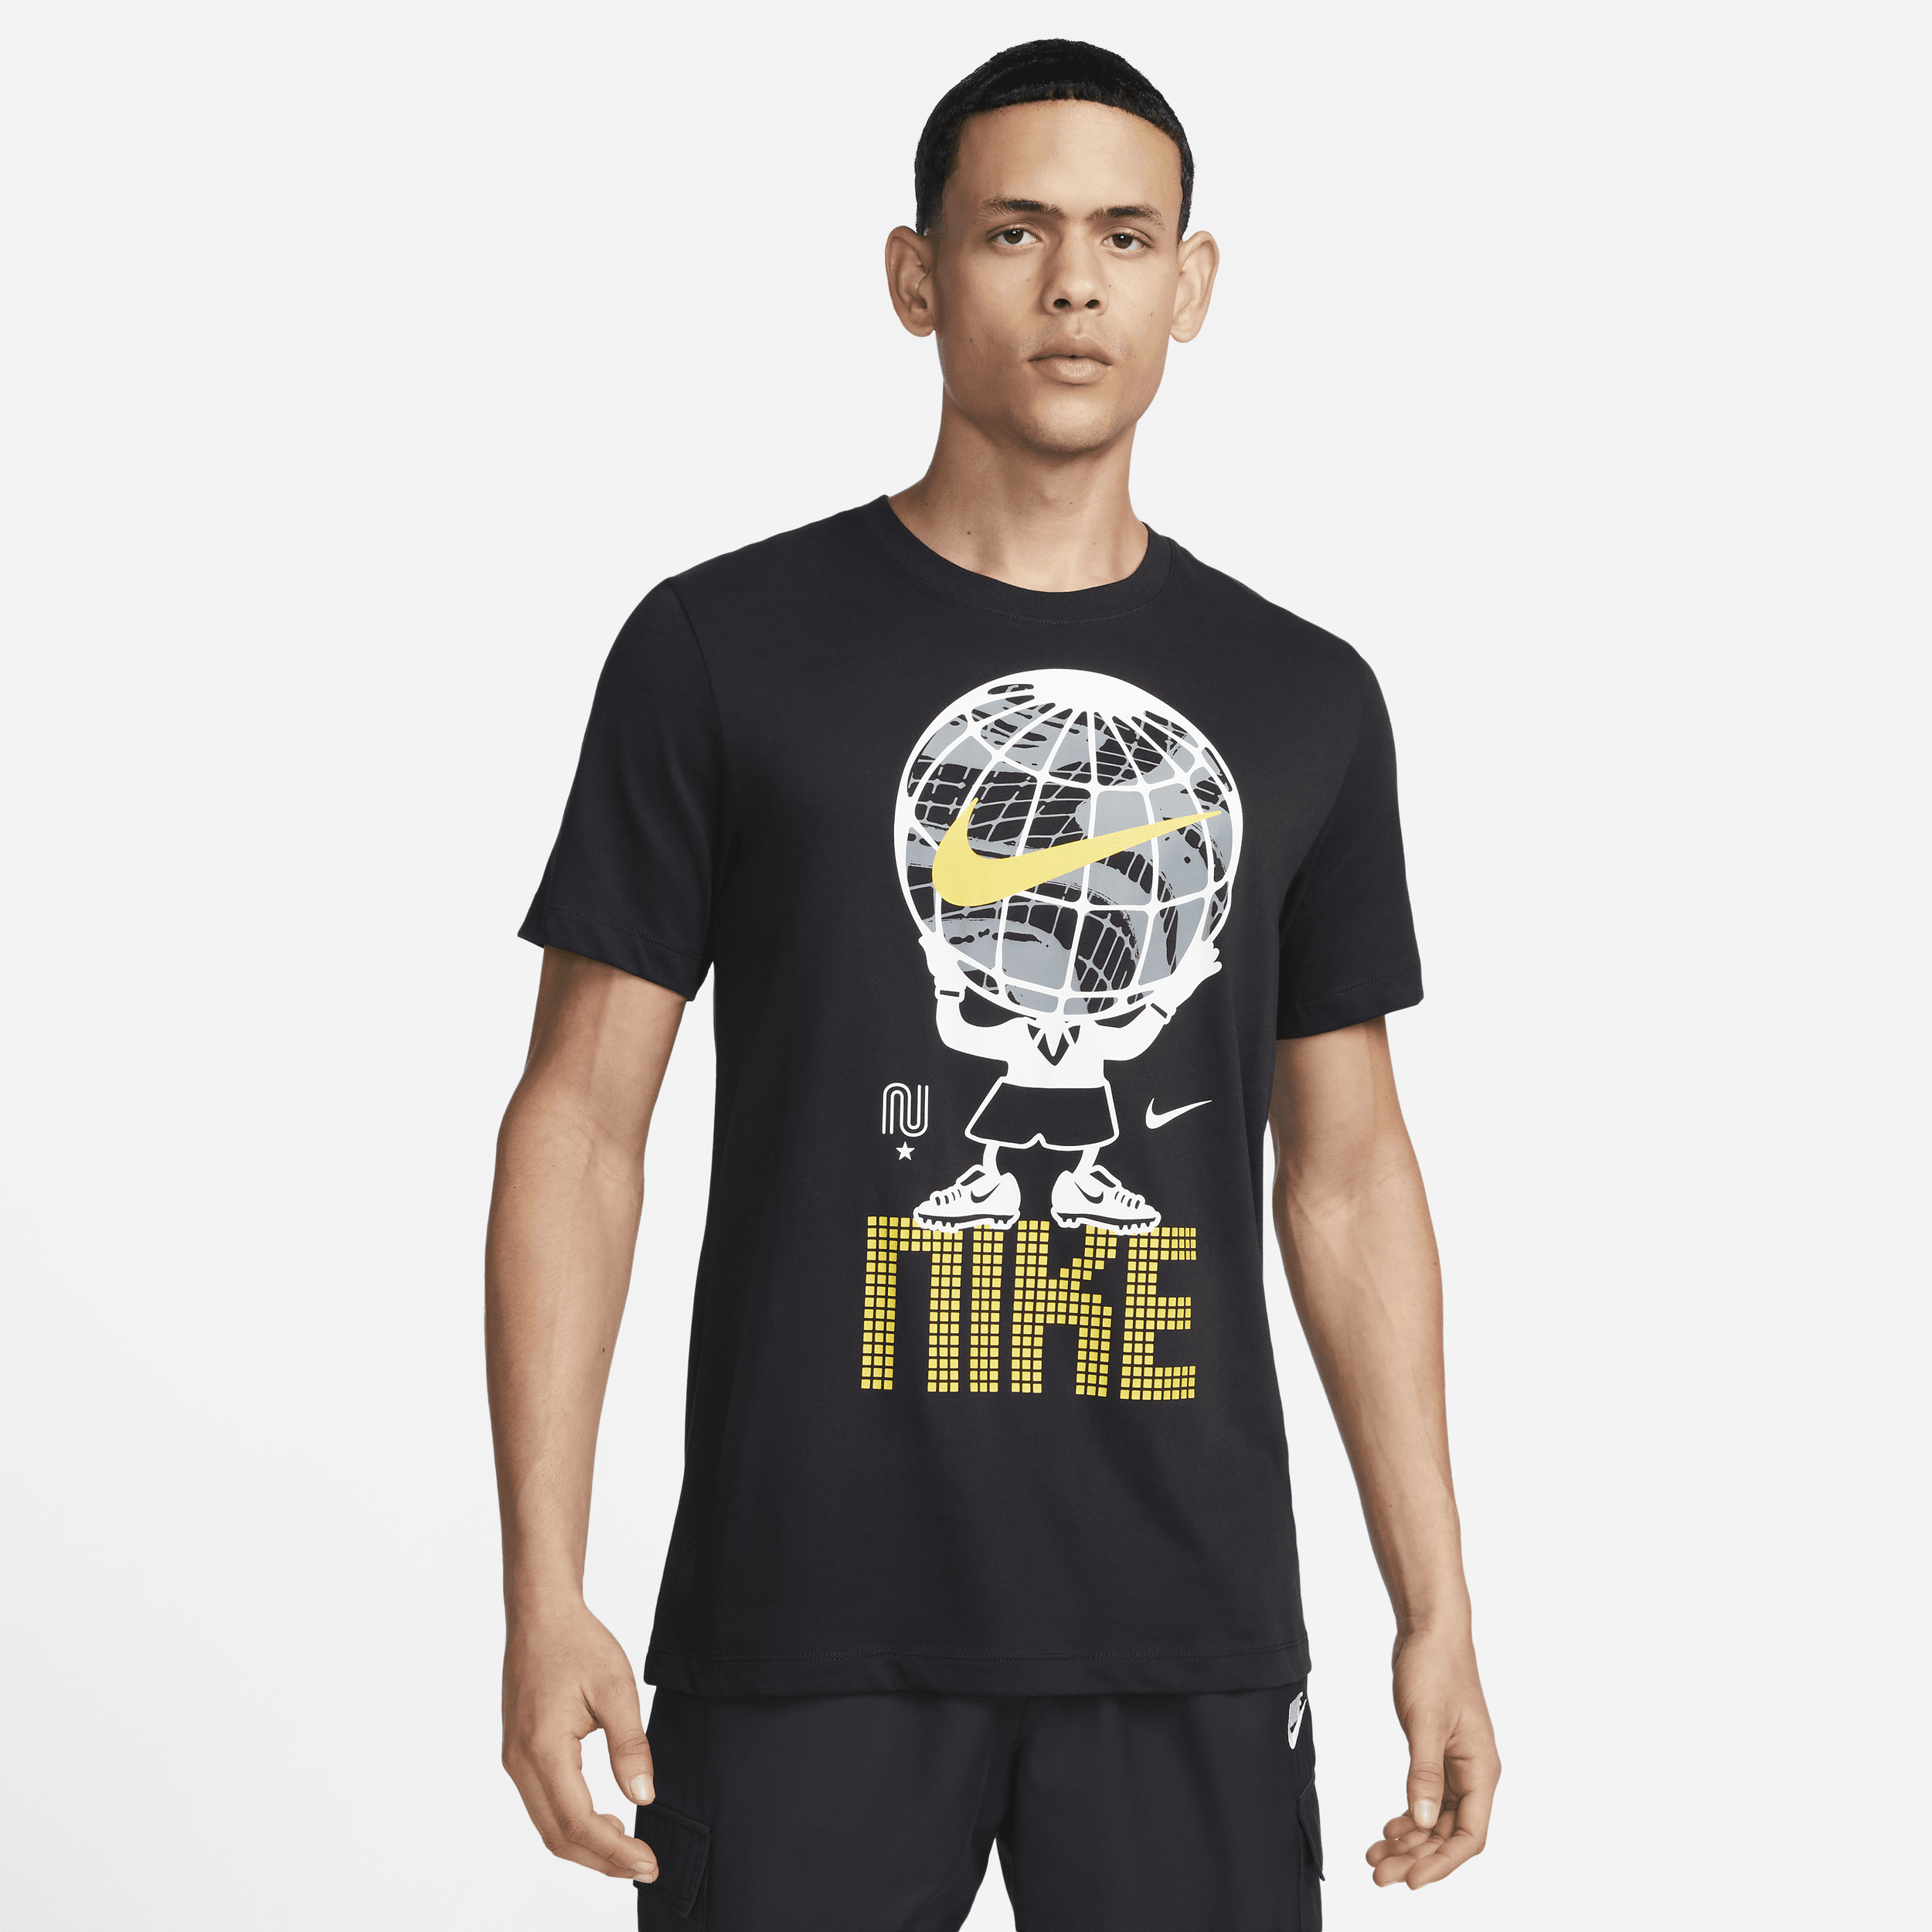 Nike F.C. Men's Dri-FIT Soccer T-Shirt.